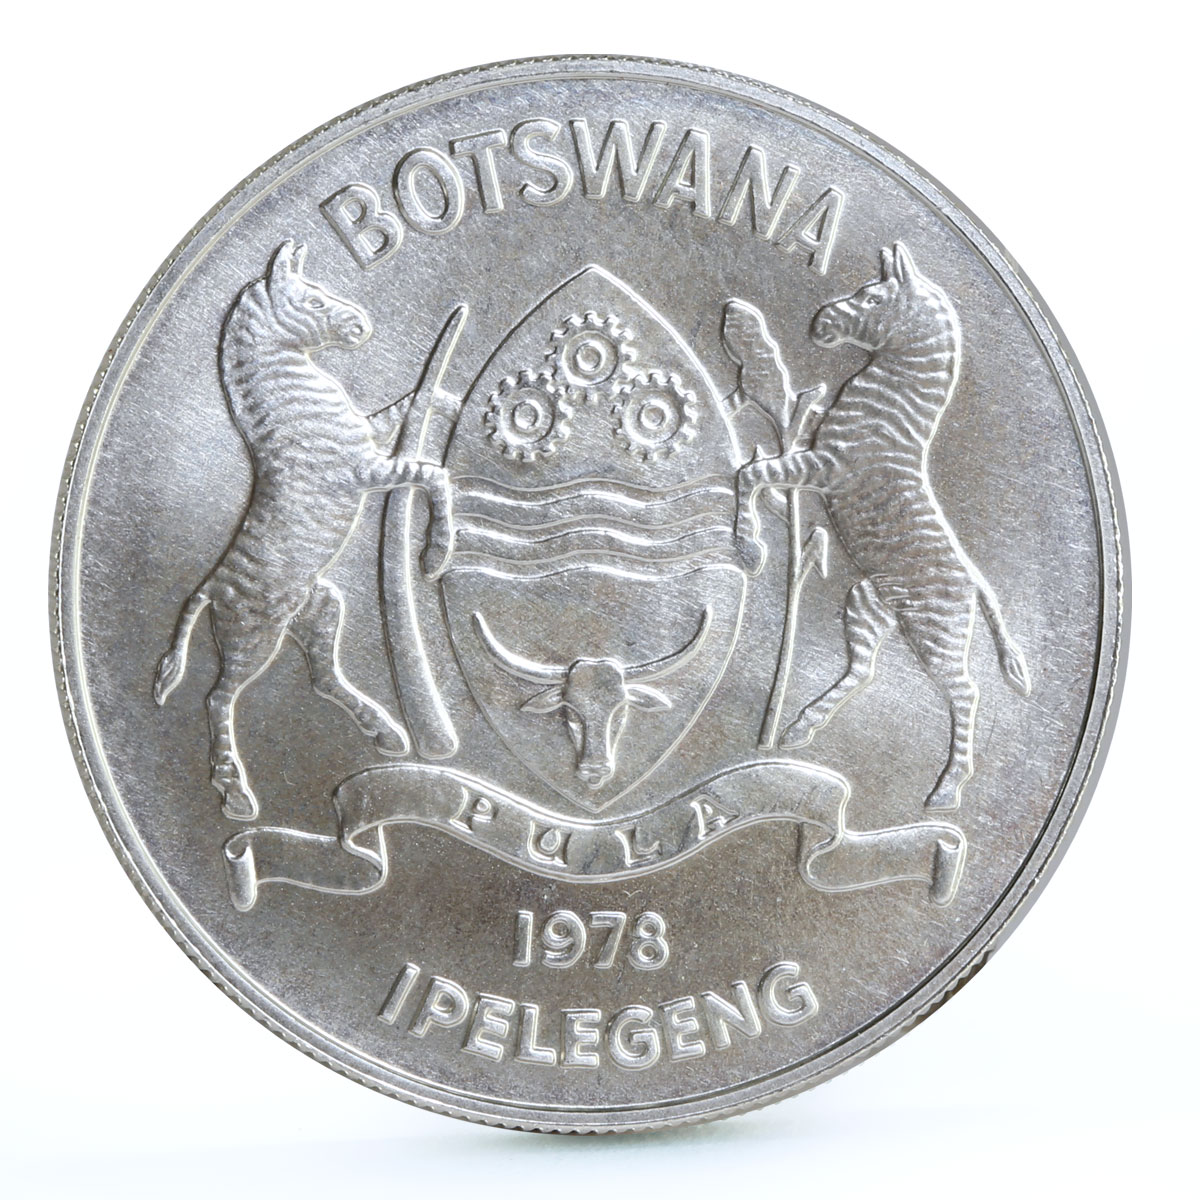 Botswana 5 pula Endangered Wildlife Gemsbok Animals Fauna silver coin 1978